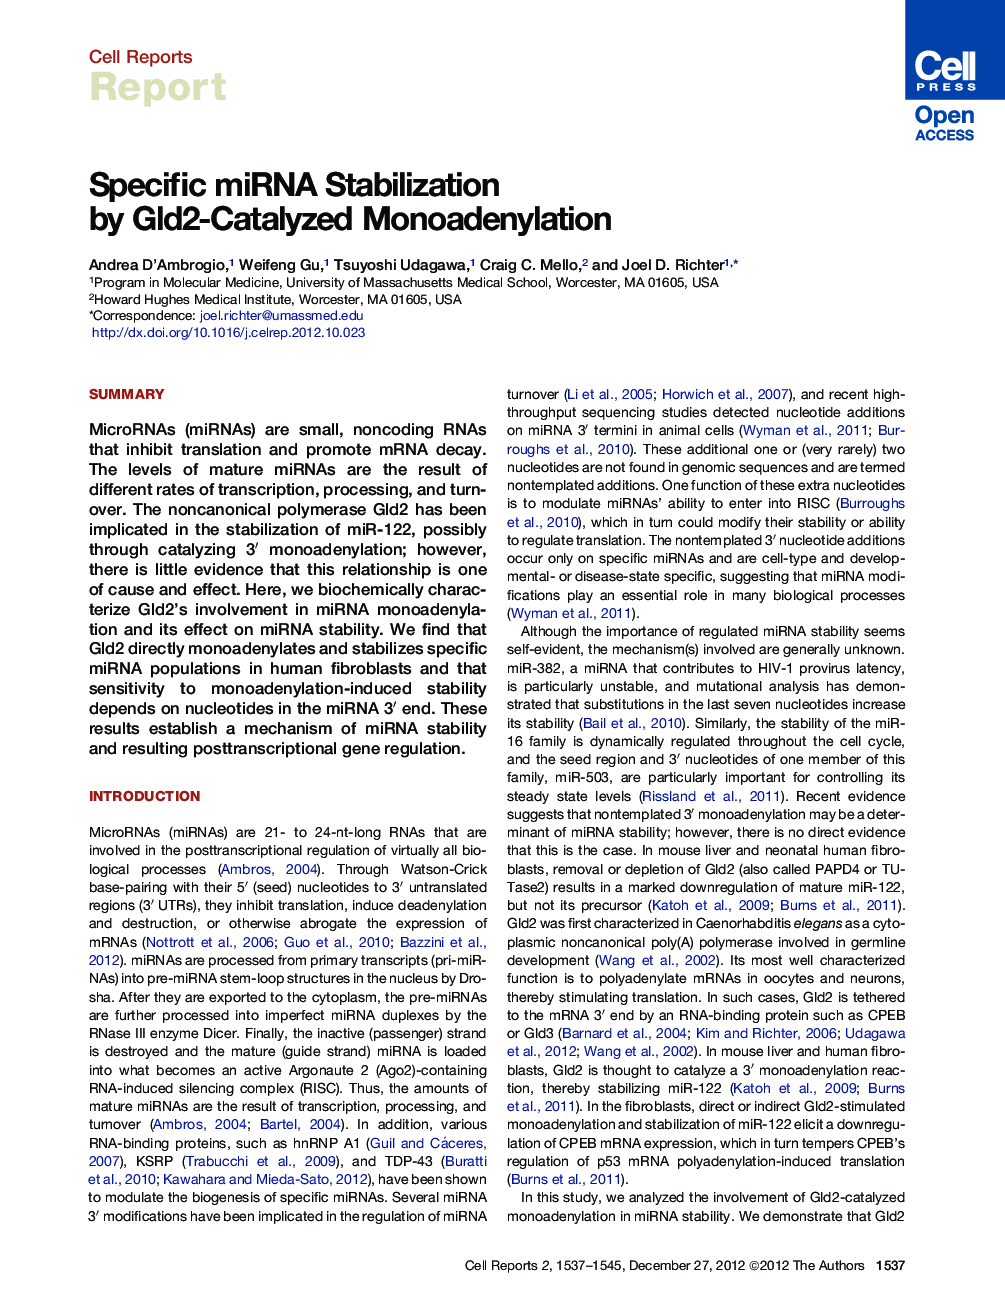 Specific miRNA Stabilization by Gld2-Catalyzed Monoadenylation